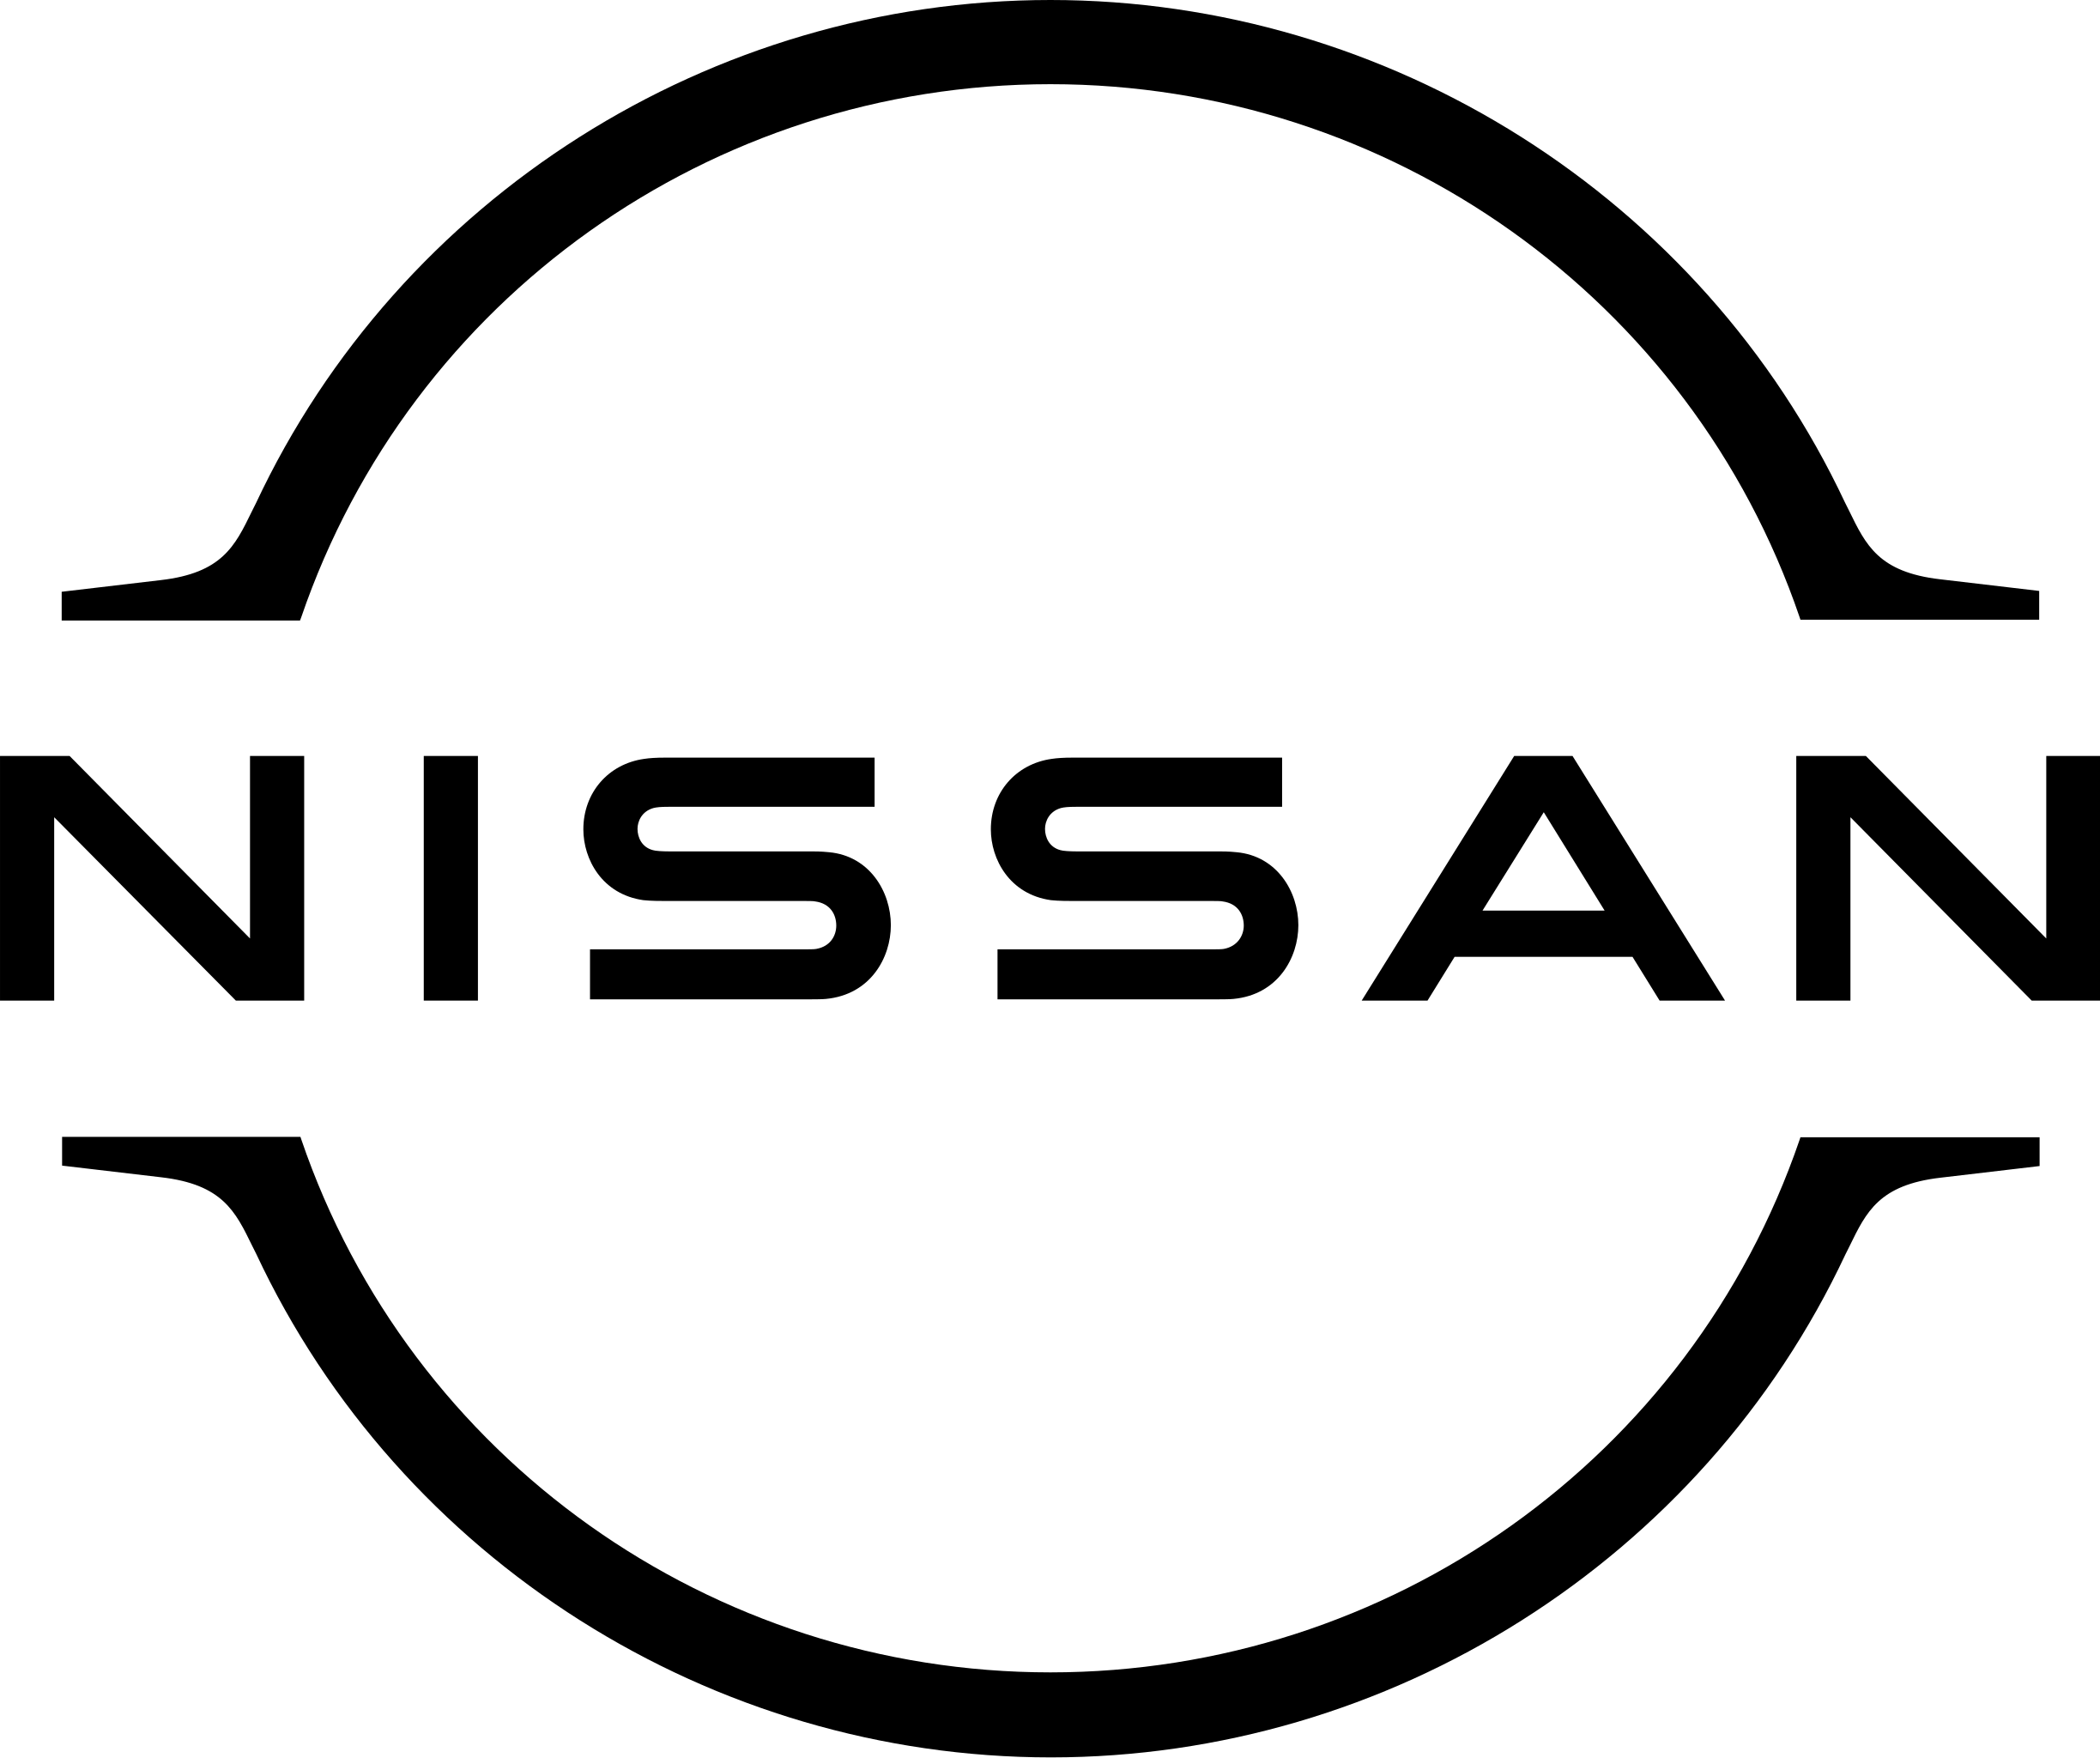 File:Nissan logo.png - Wikipedia